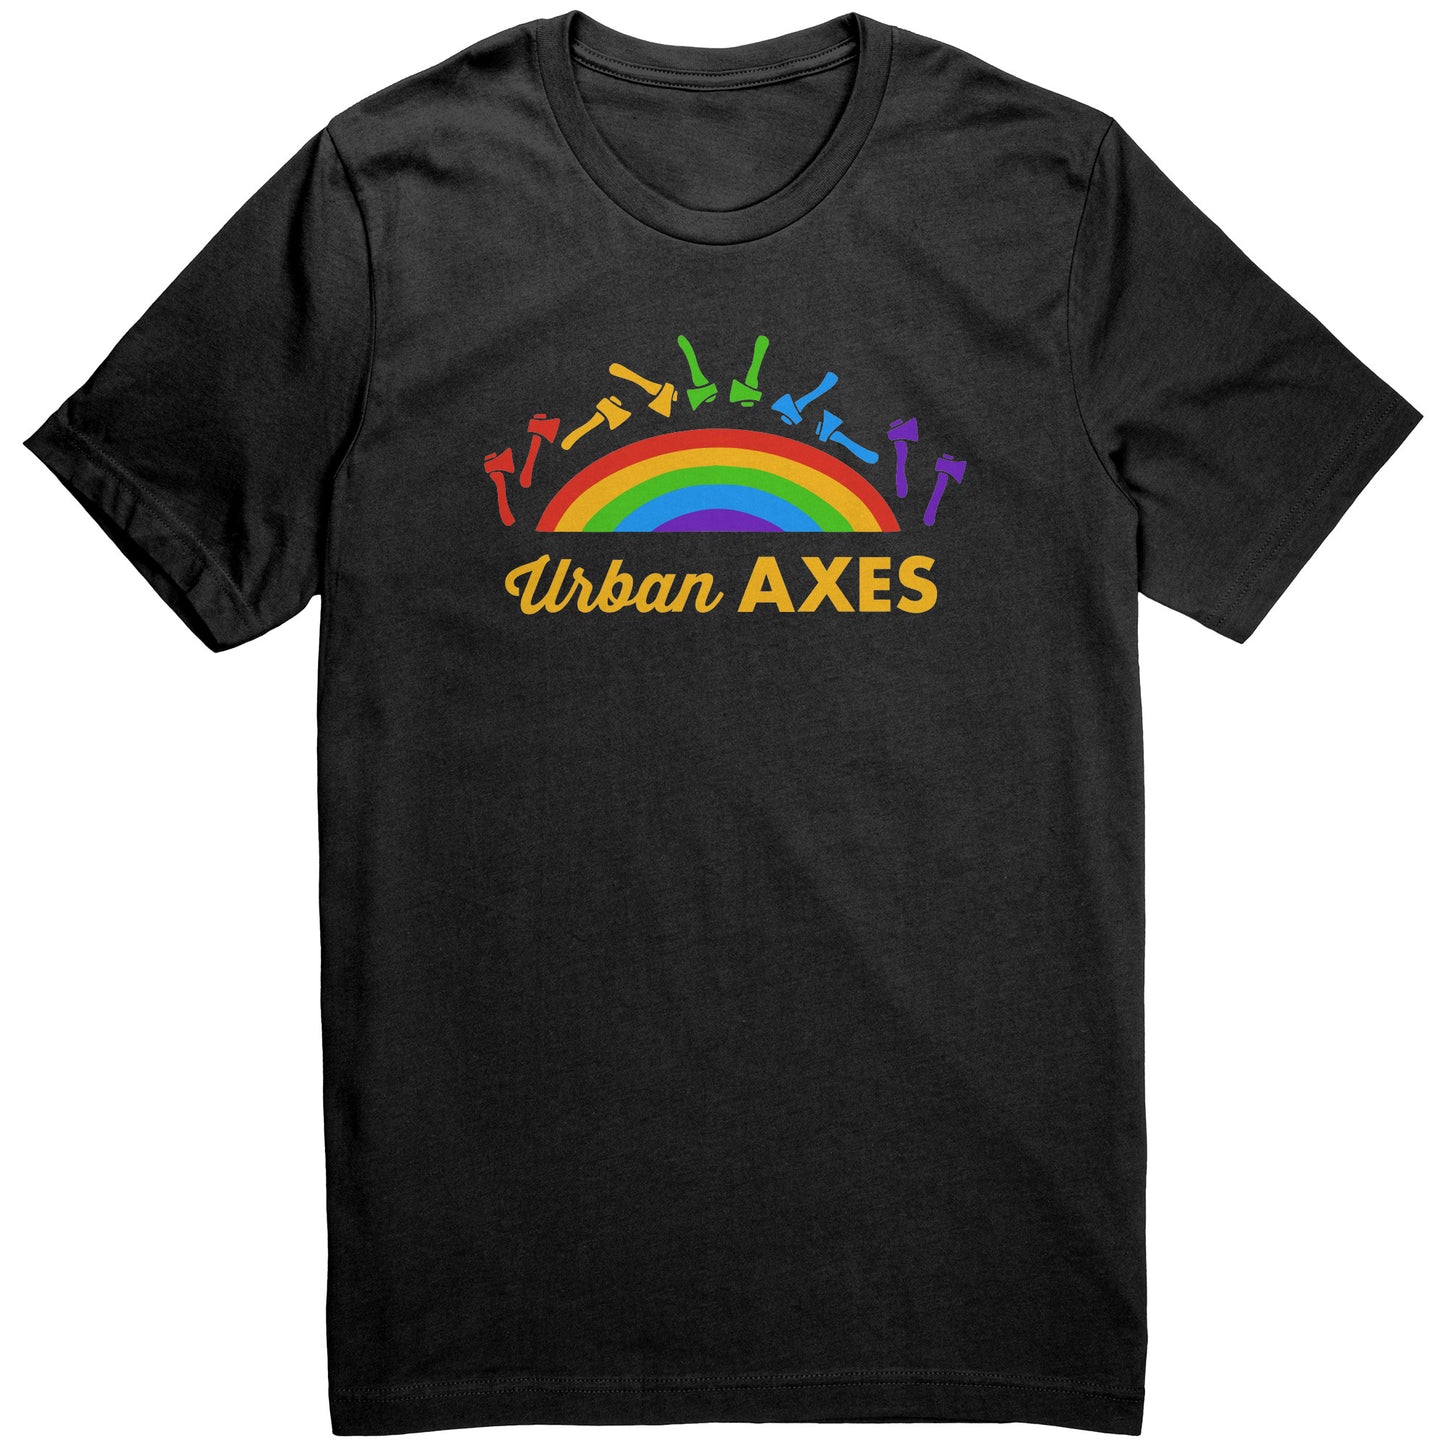 Urban Axes Rainbow Pride Shirt - Canvas Unisex